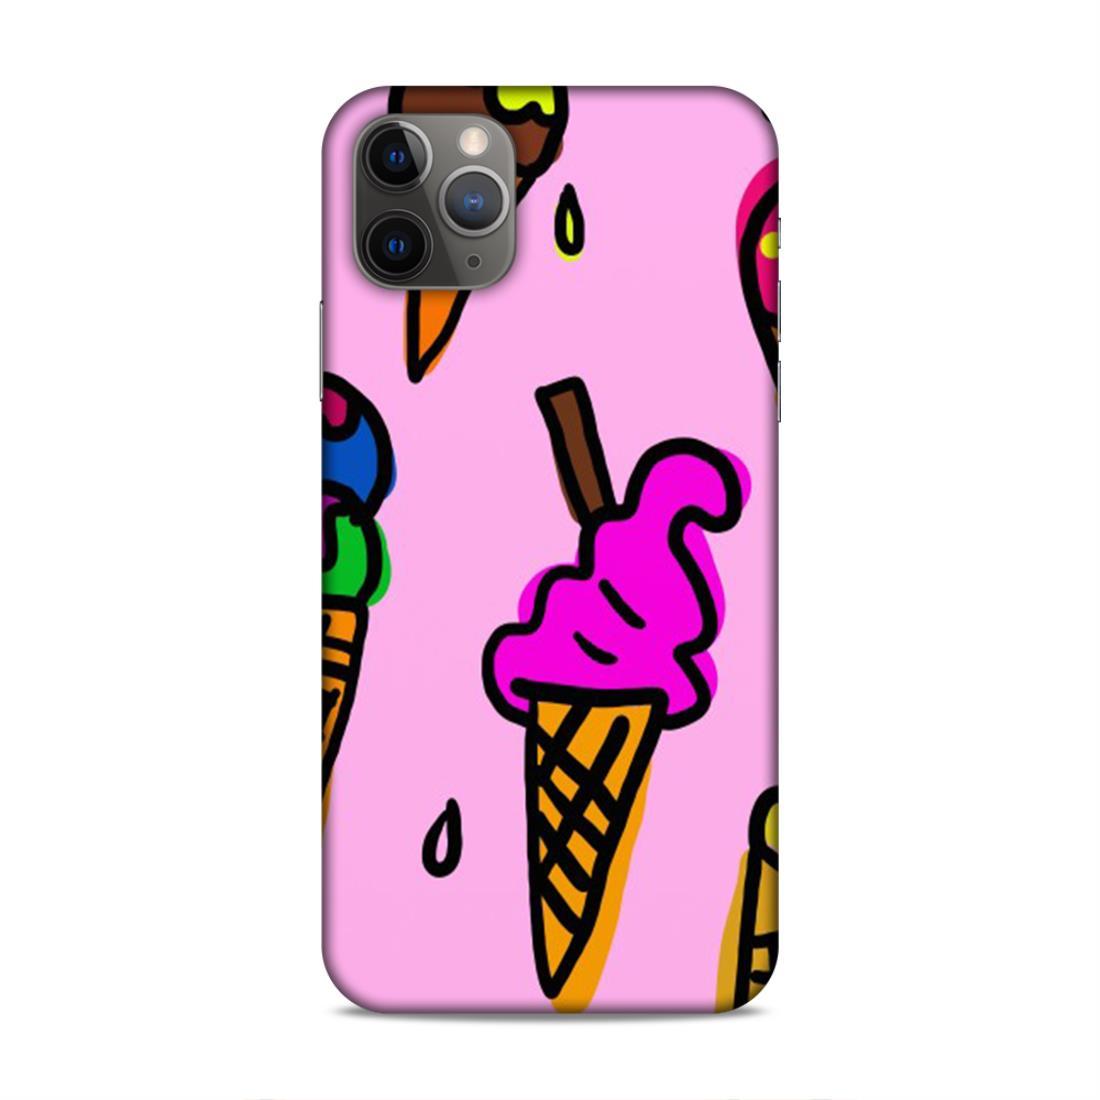 Icecream Pink iPhone 11 Pro Max Phone Cover